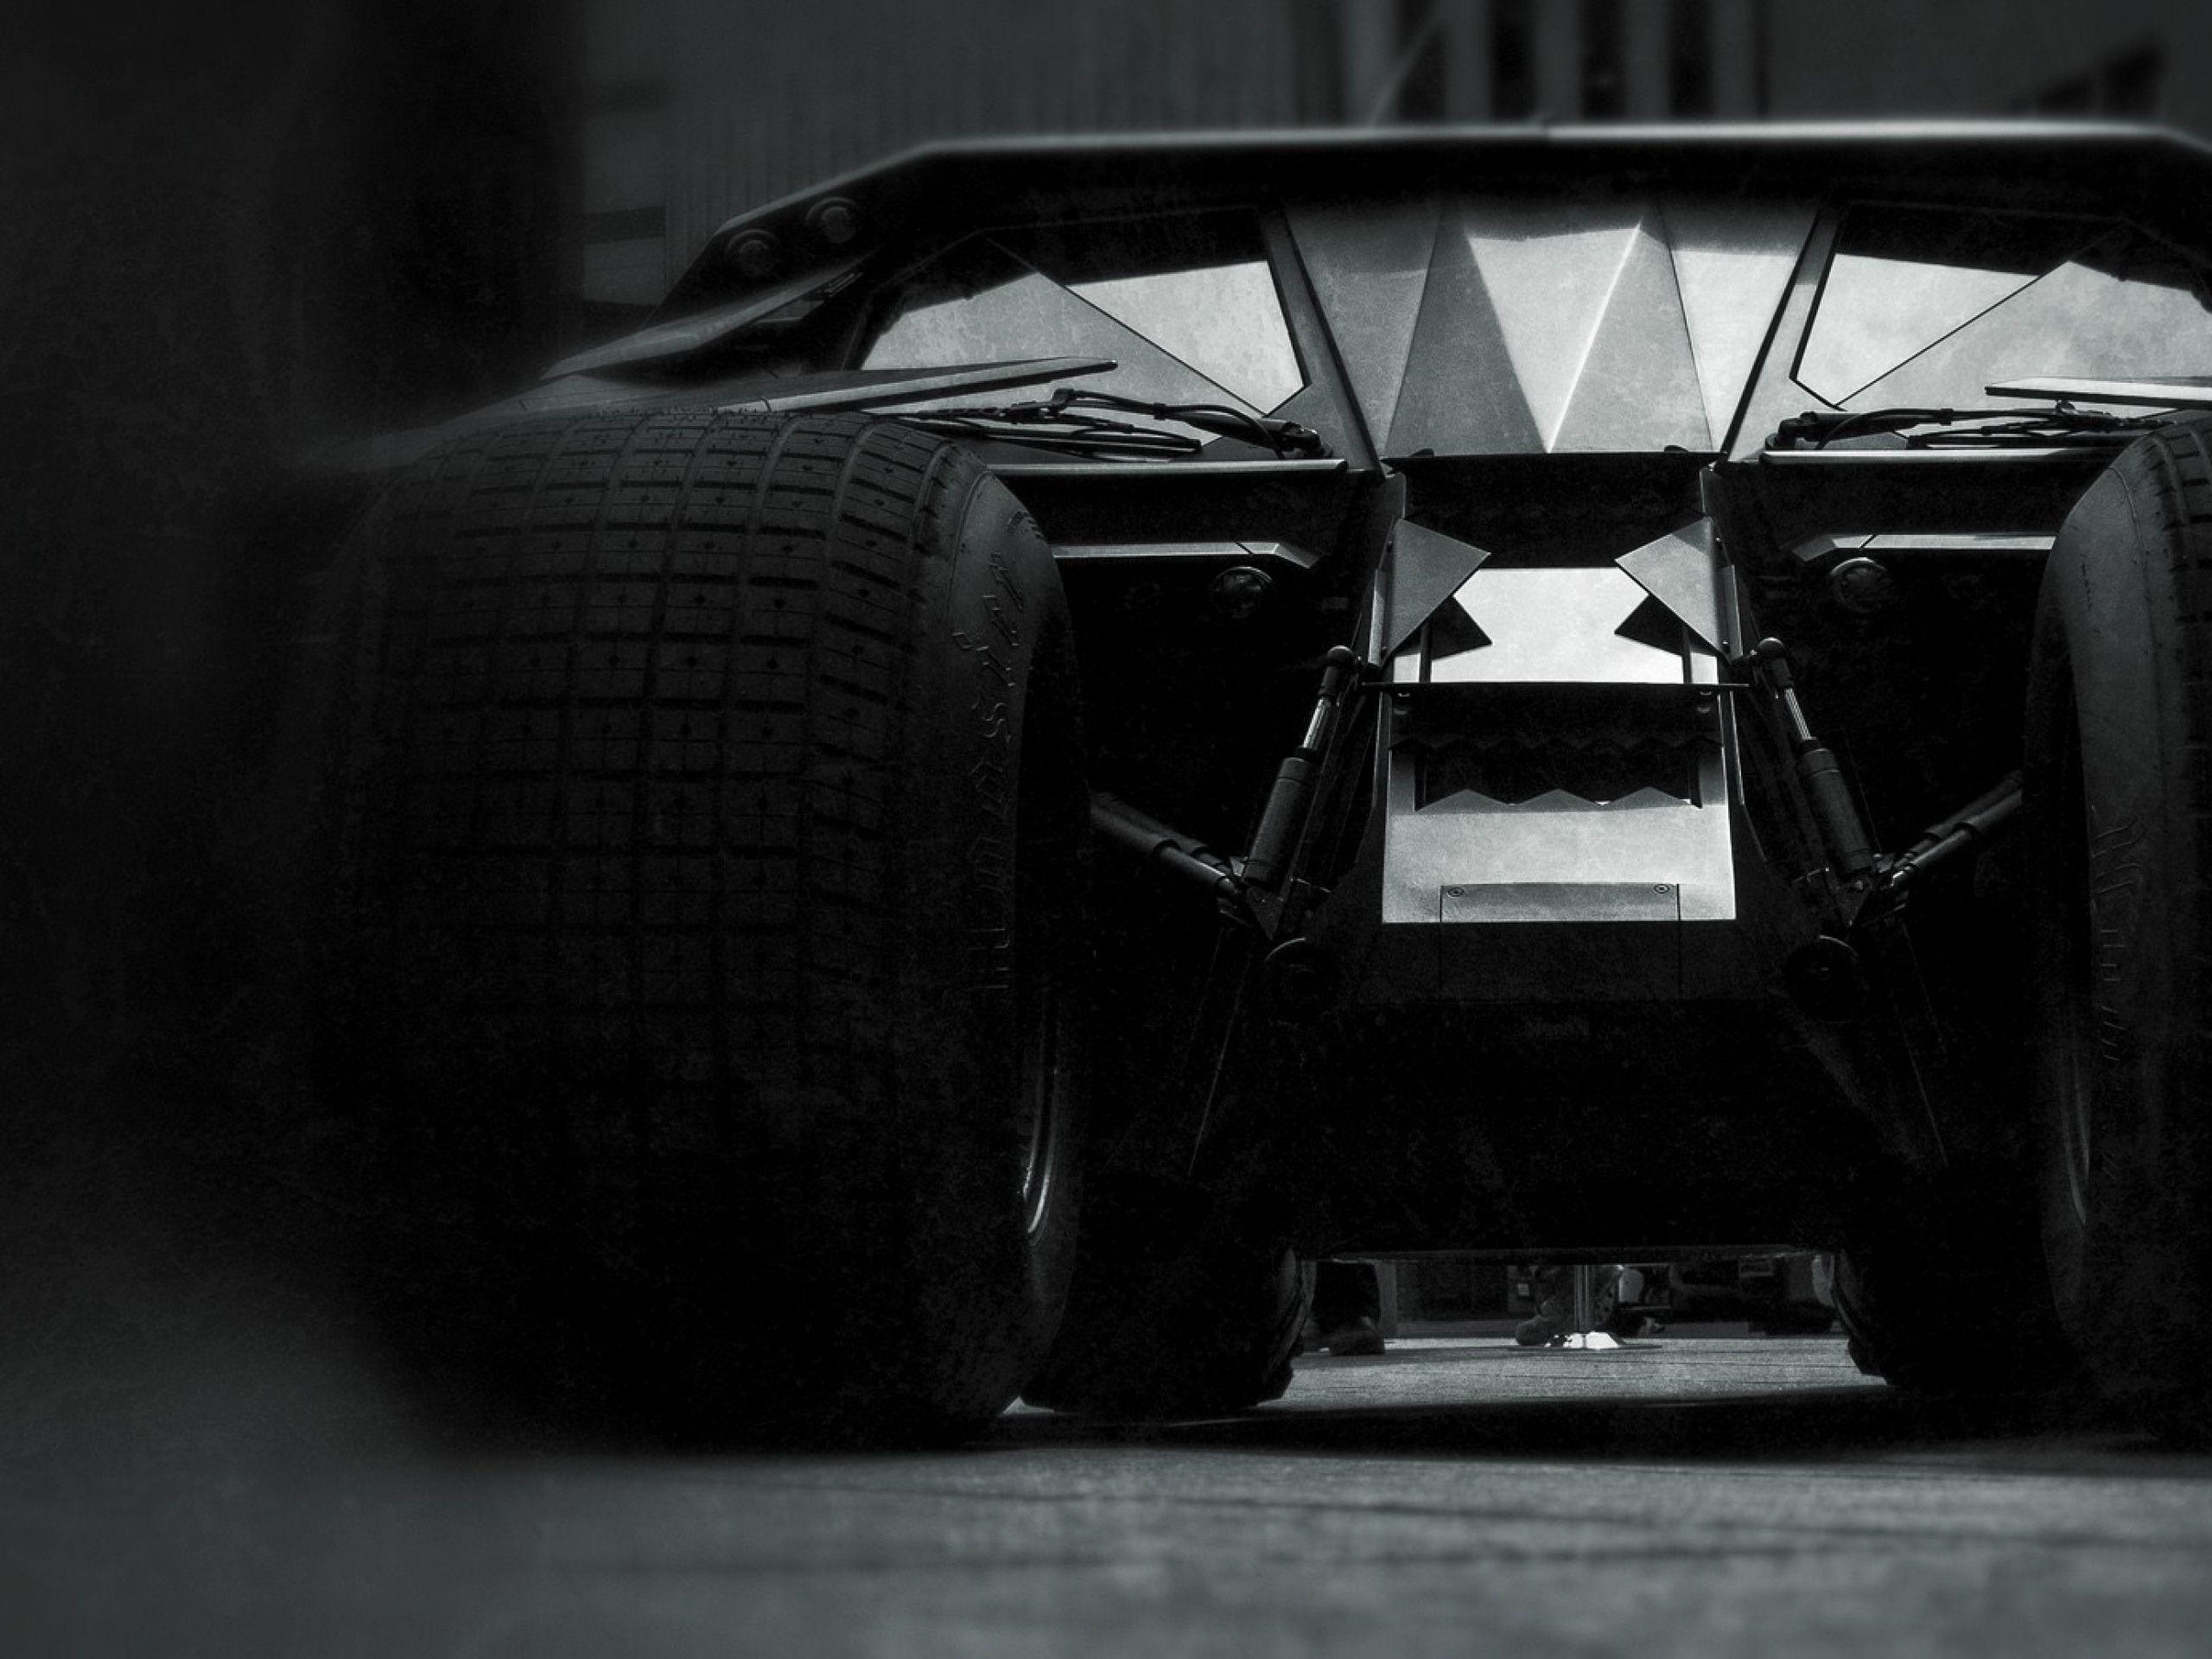 batmobile black background